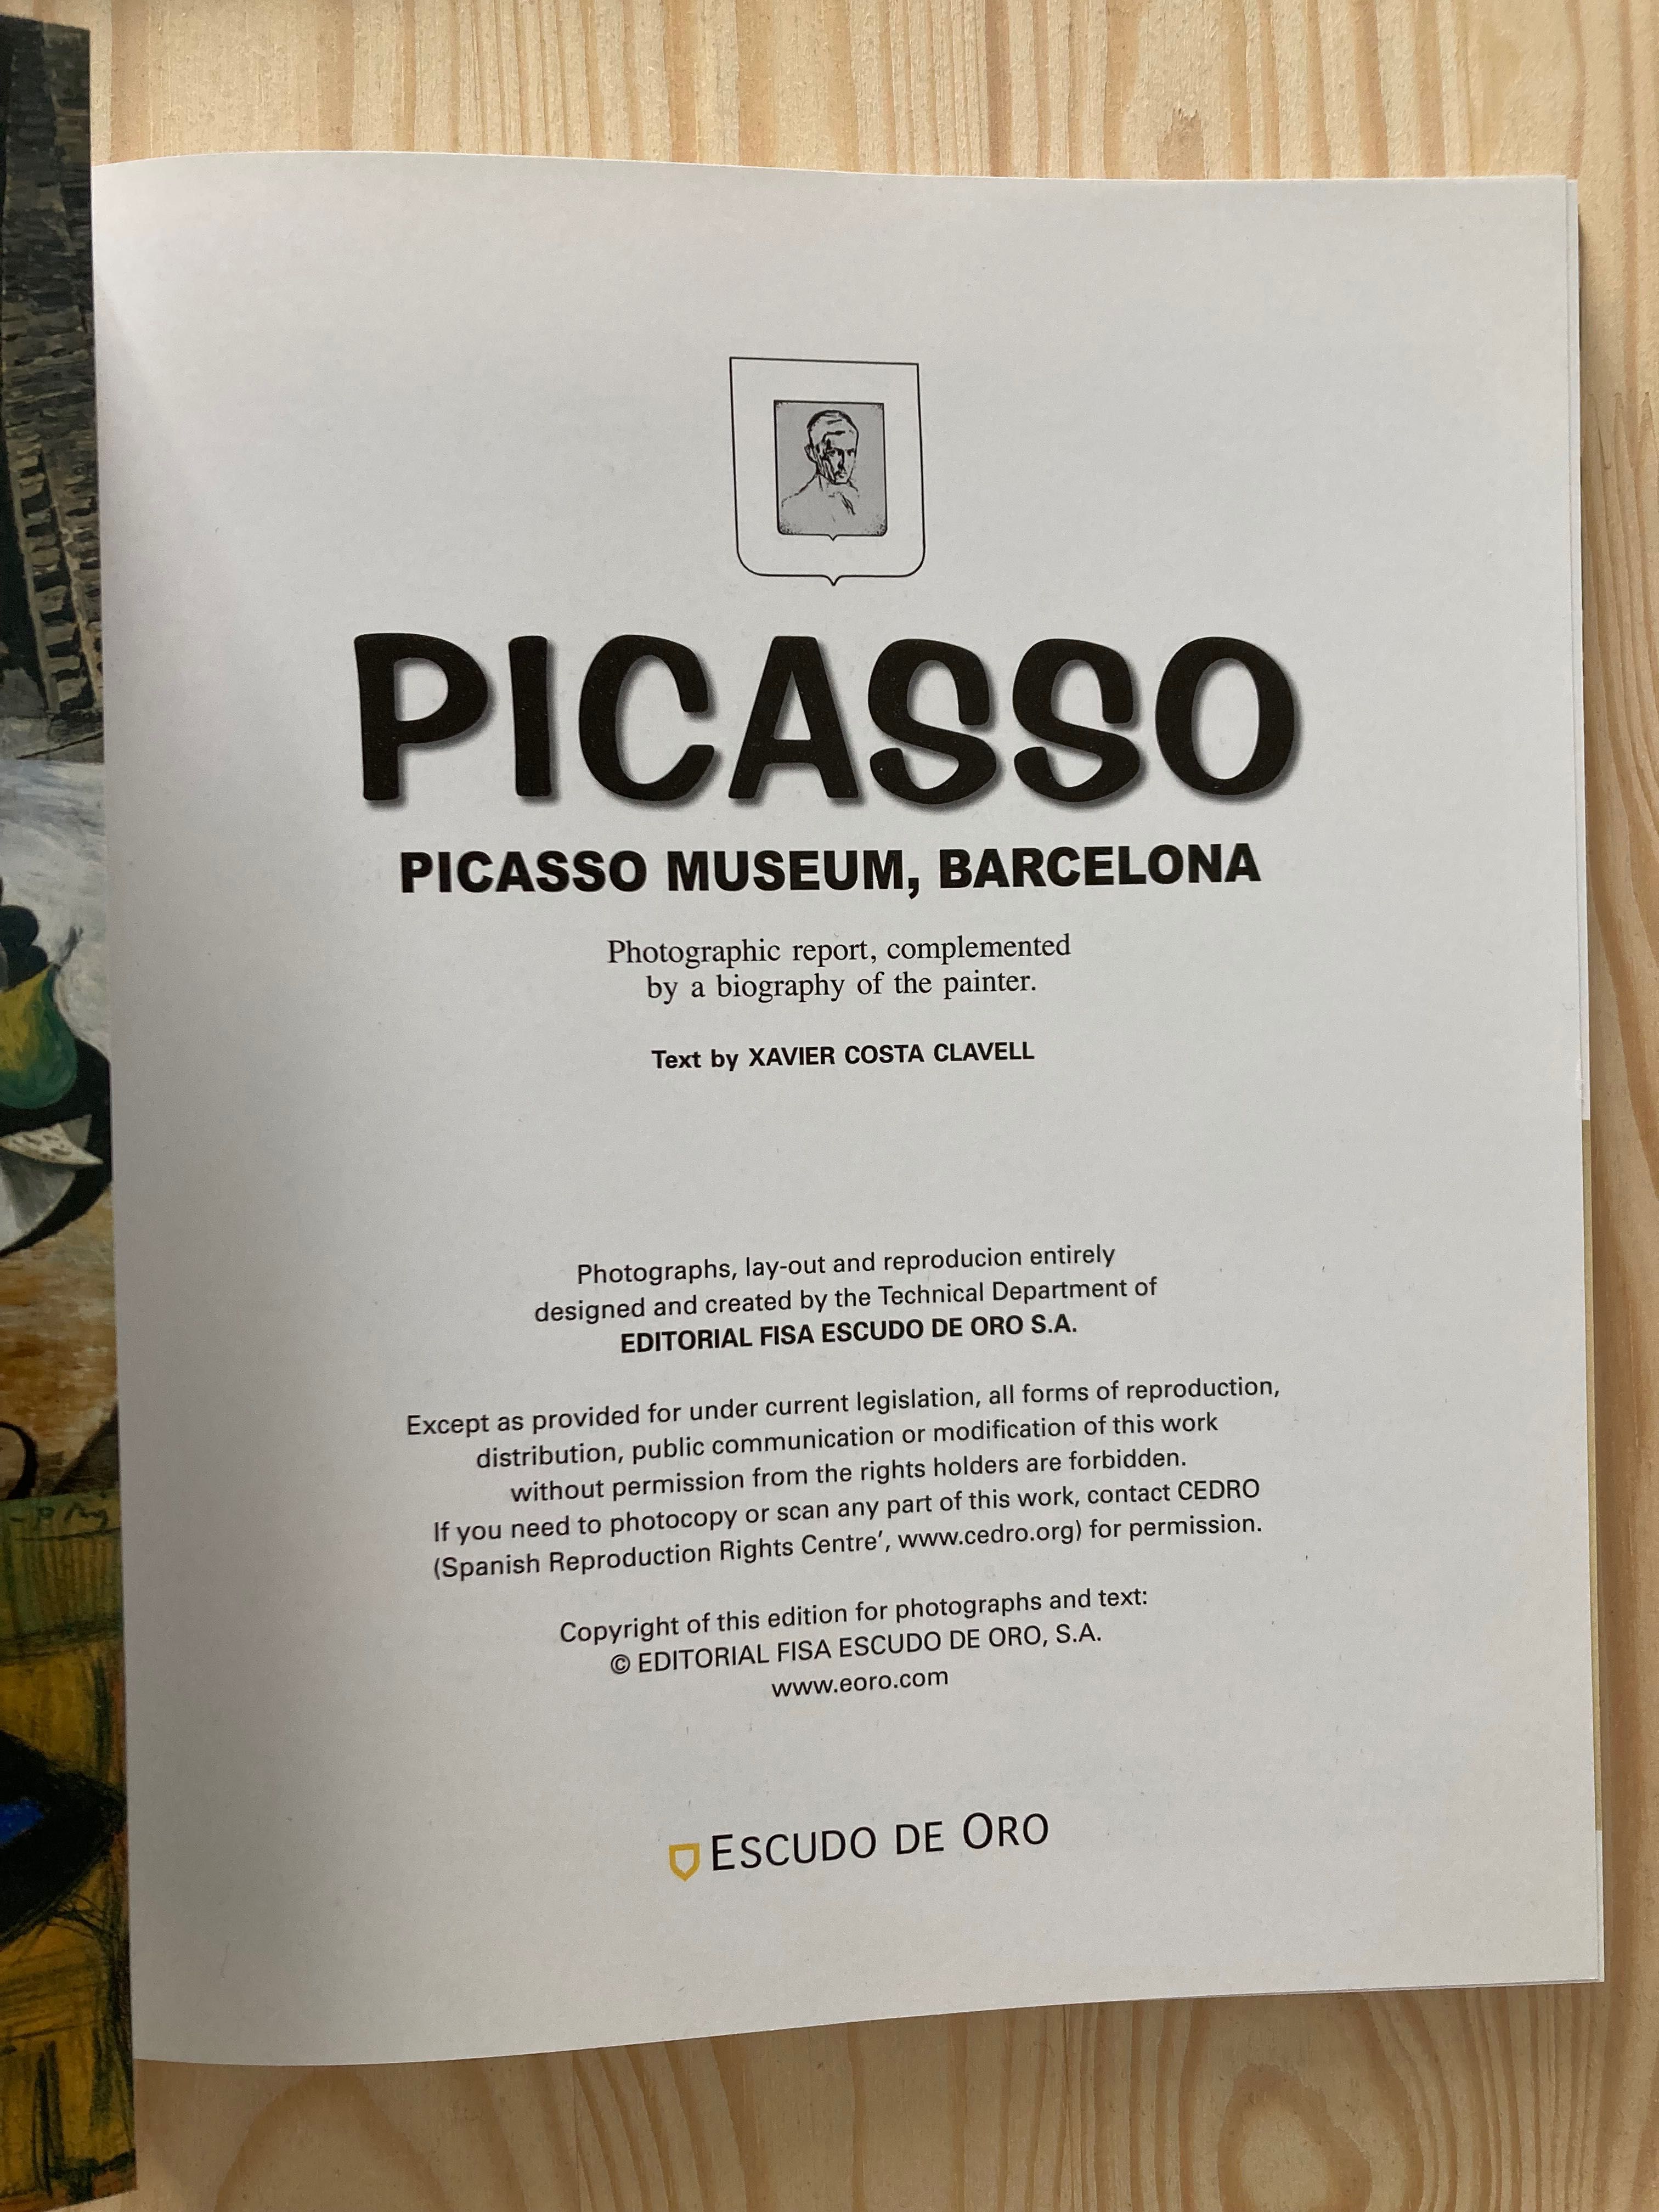 Katalog Picasso, Picasso Museum, Barcelona - nowy